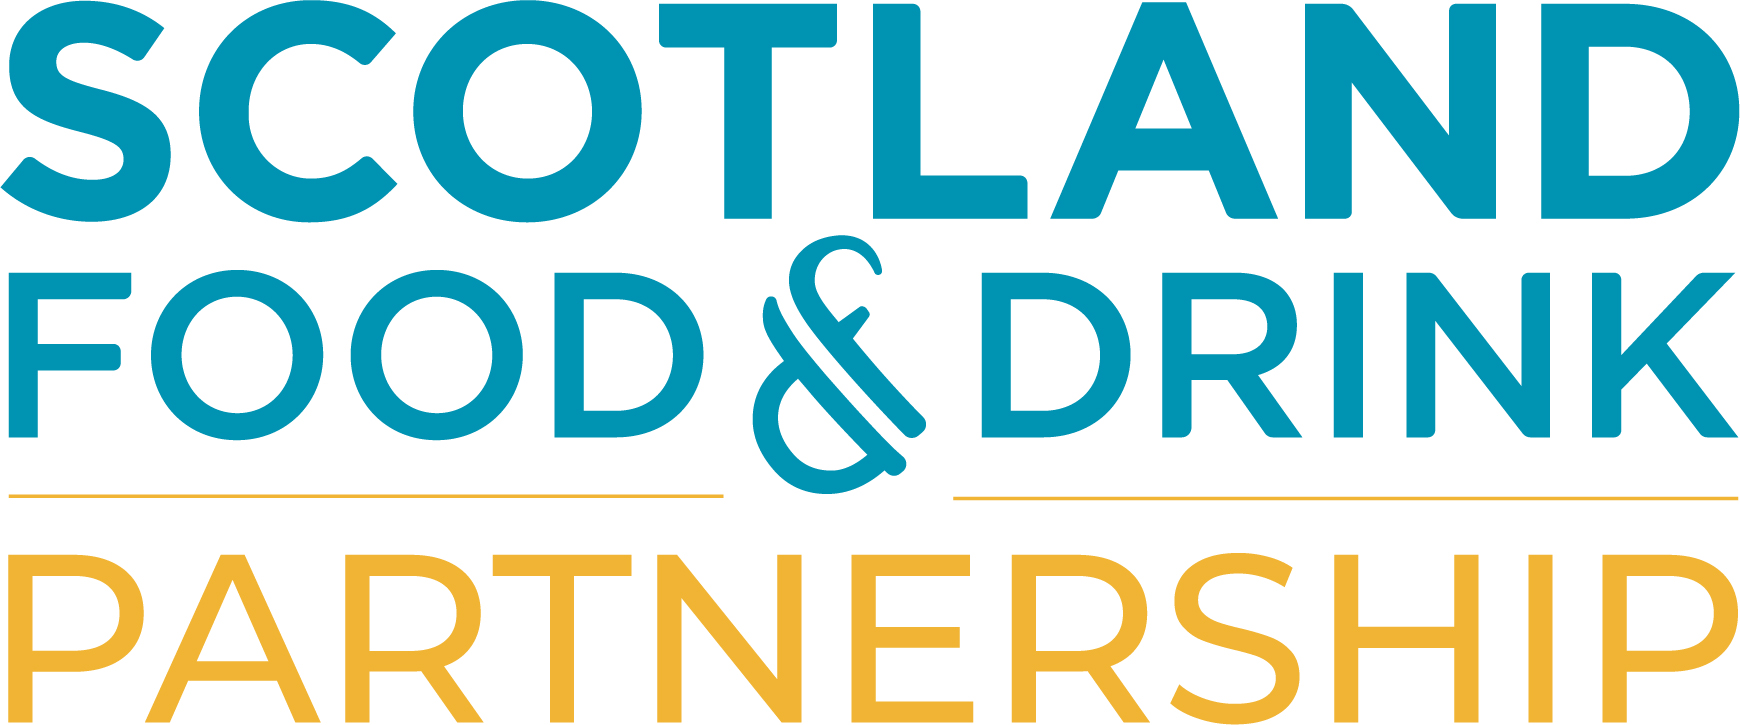 Scotland Food Drink PARTNERSHIP Logo 